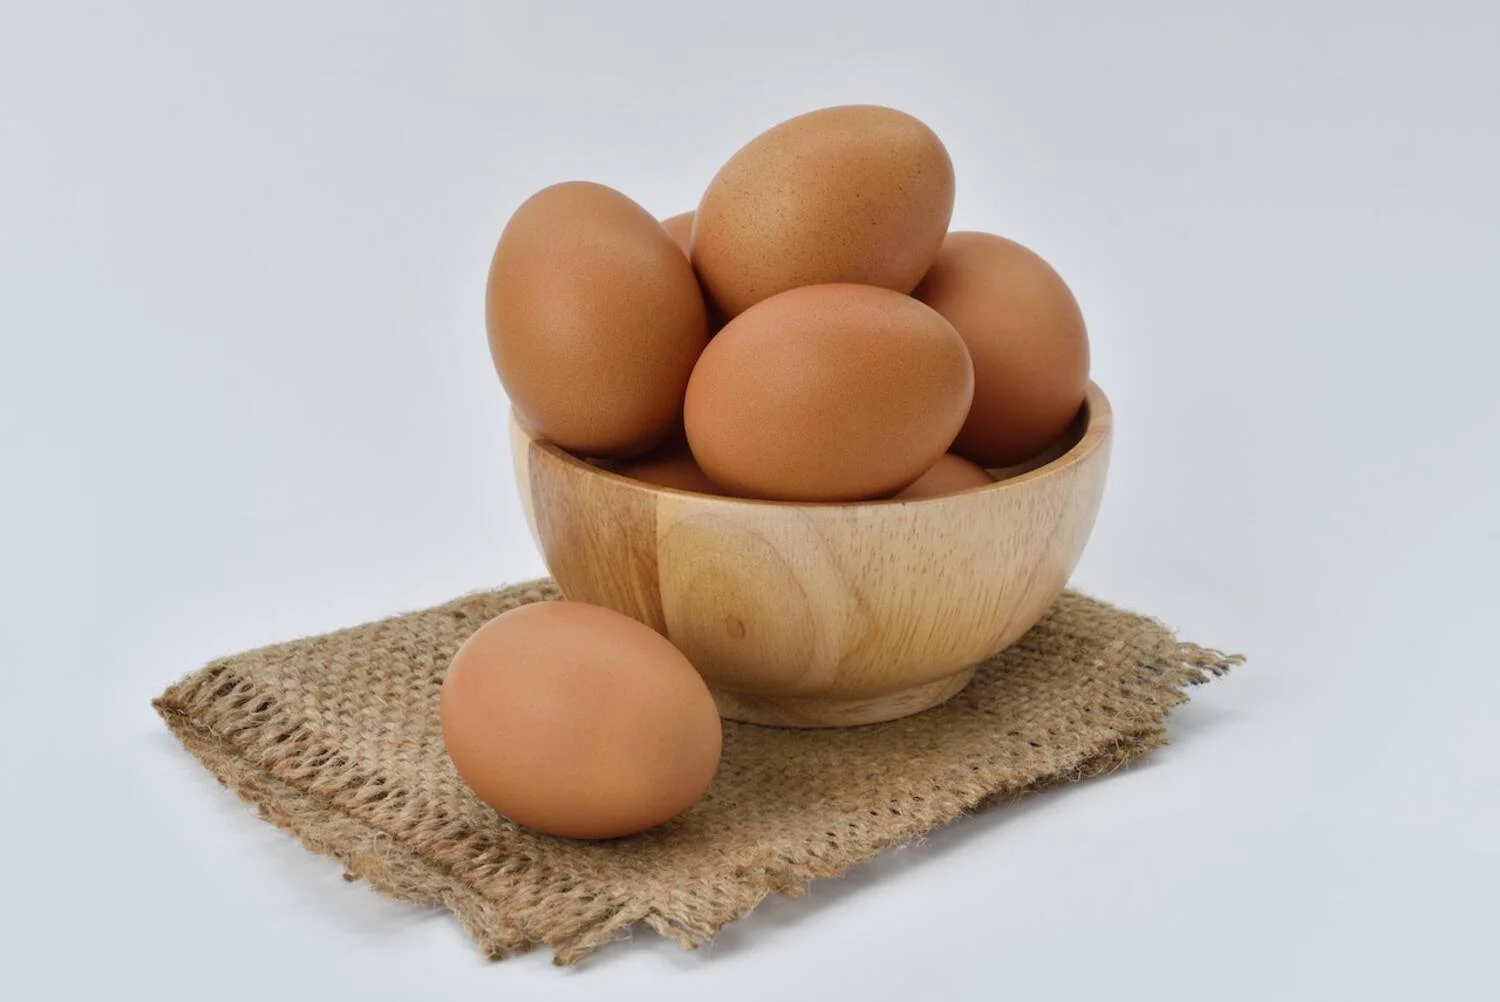 Eggs for Vitamin A